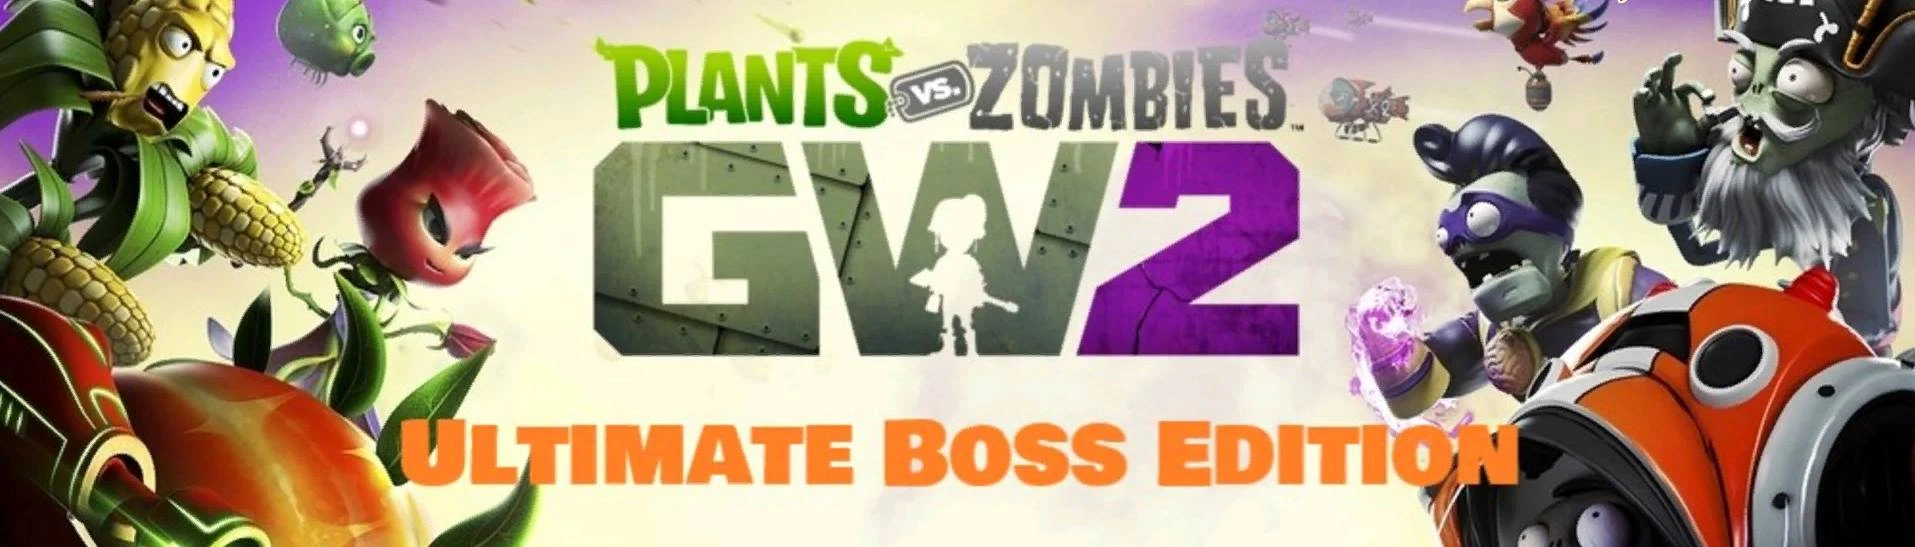 Ultimate Boss Edition at Plants vs. Zombies: Garden Warfare 2